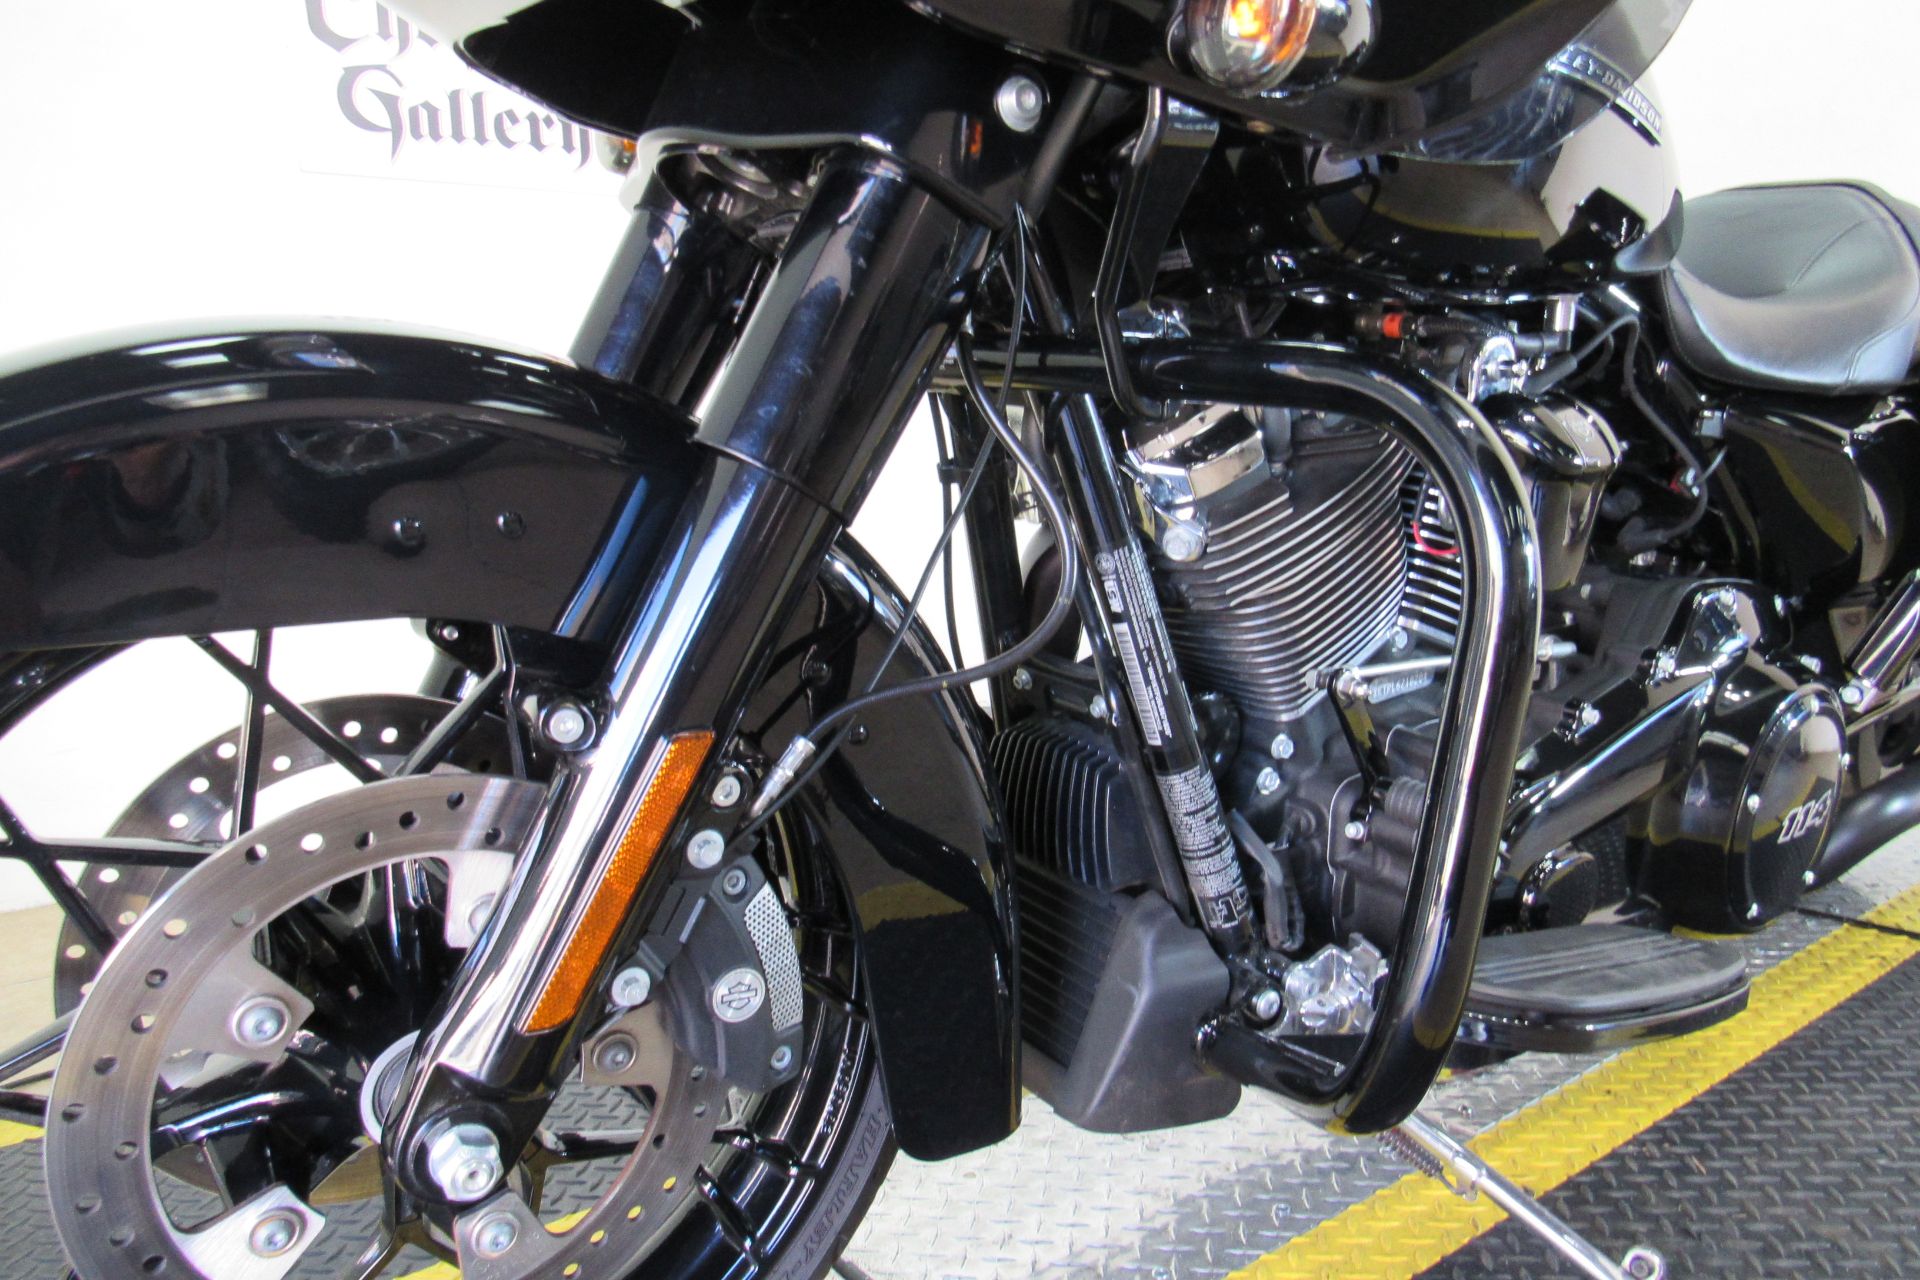 2020 Harley-Davidson Road Glide® Special in Temecula, California - Photo 18